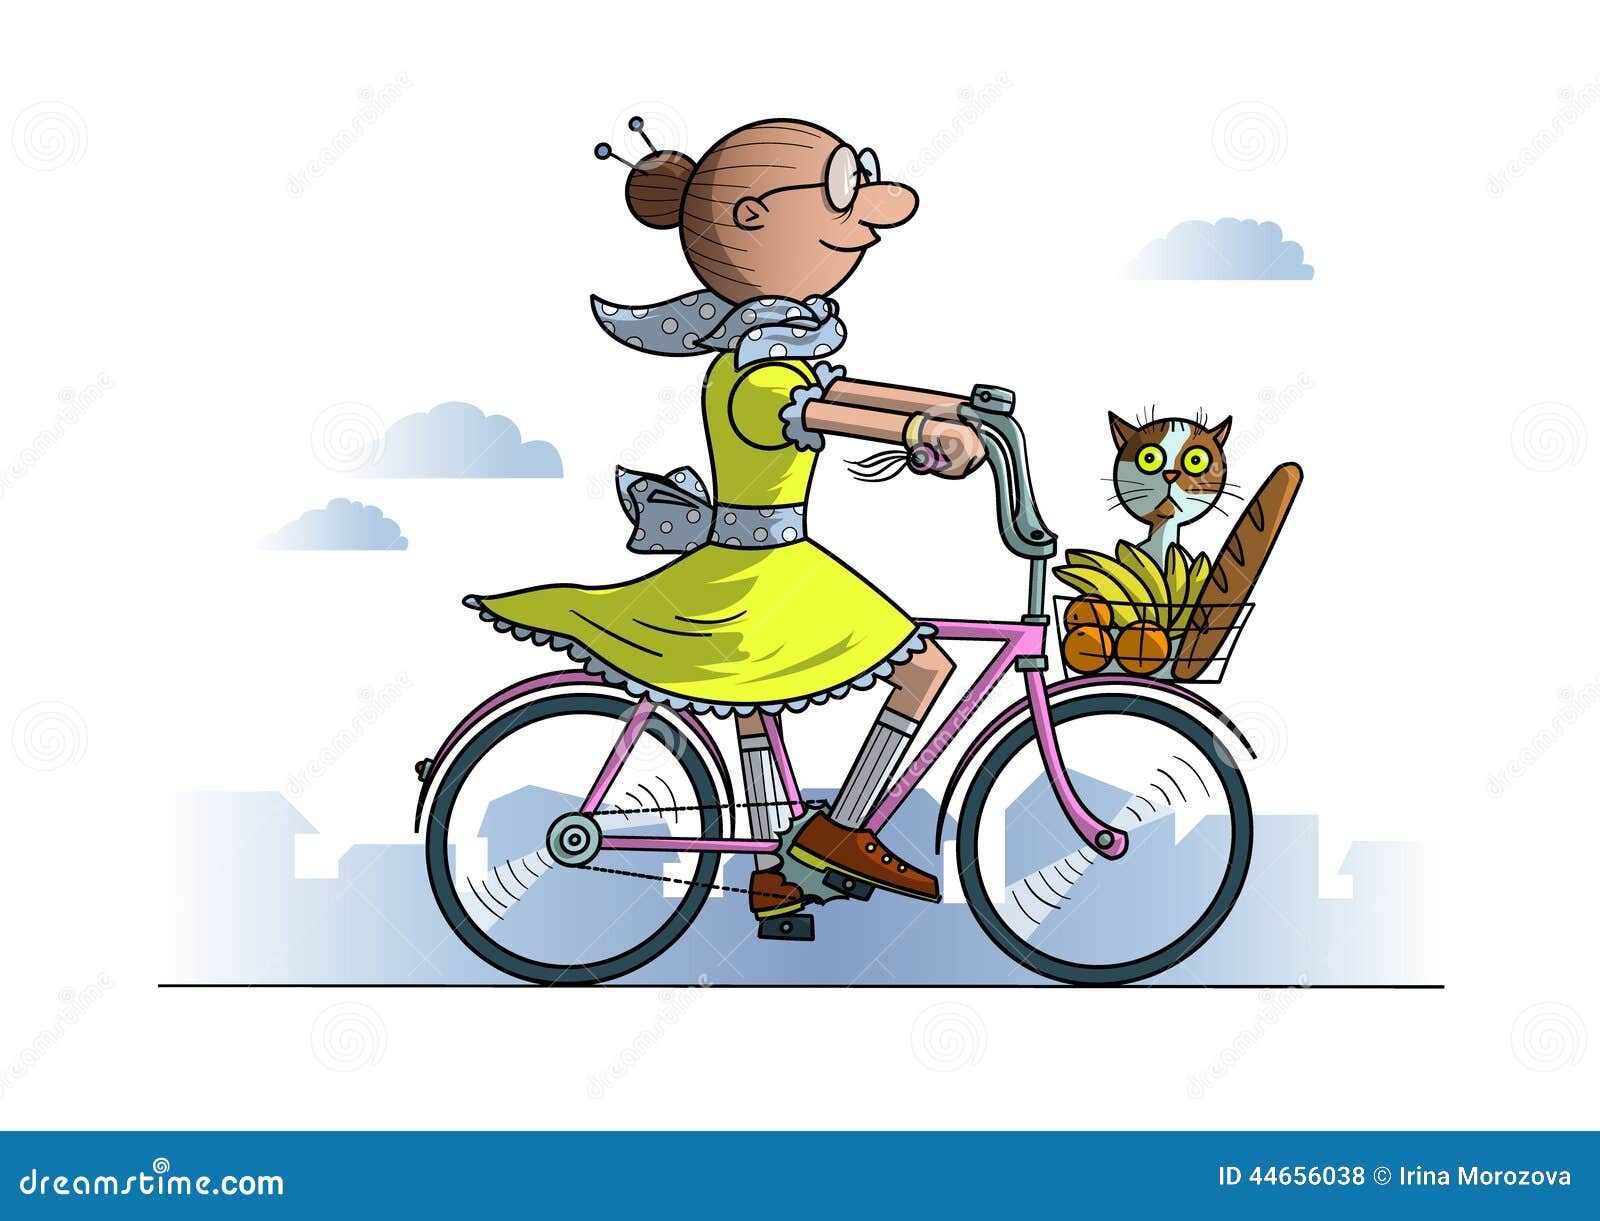 Bike Lady Stock Illustrations – 58 Bike Glasses Lady Stock Illustrations, Vectors Clipart - Dreamstime